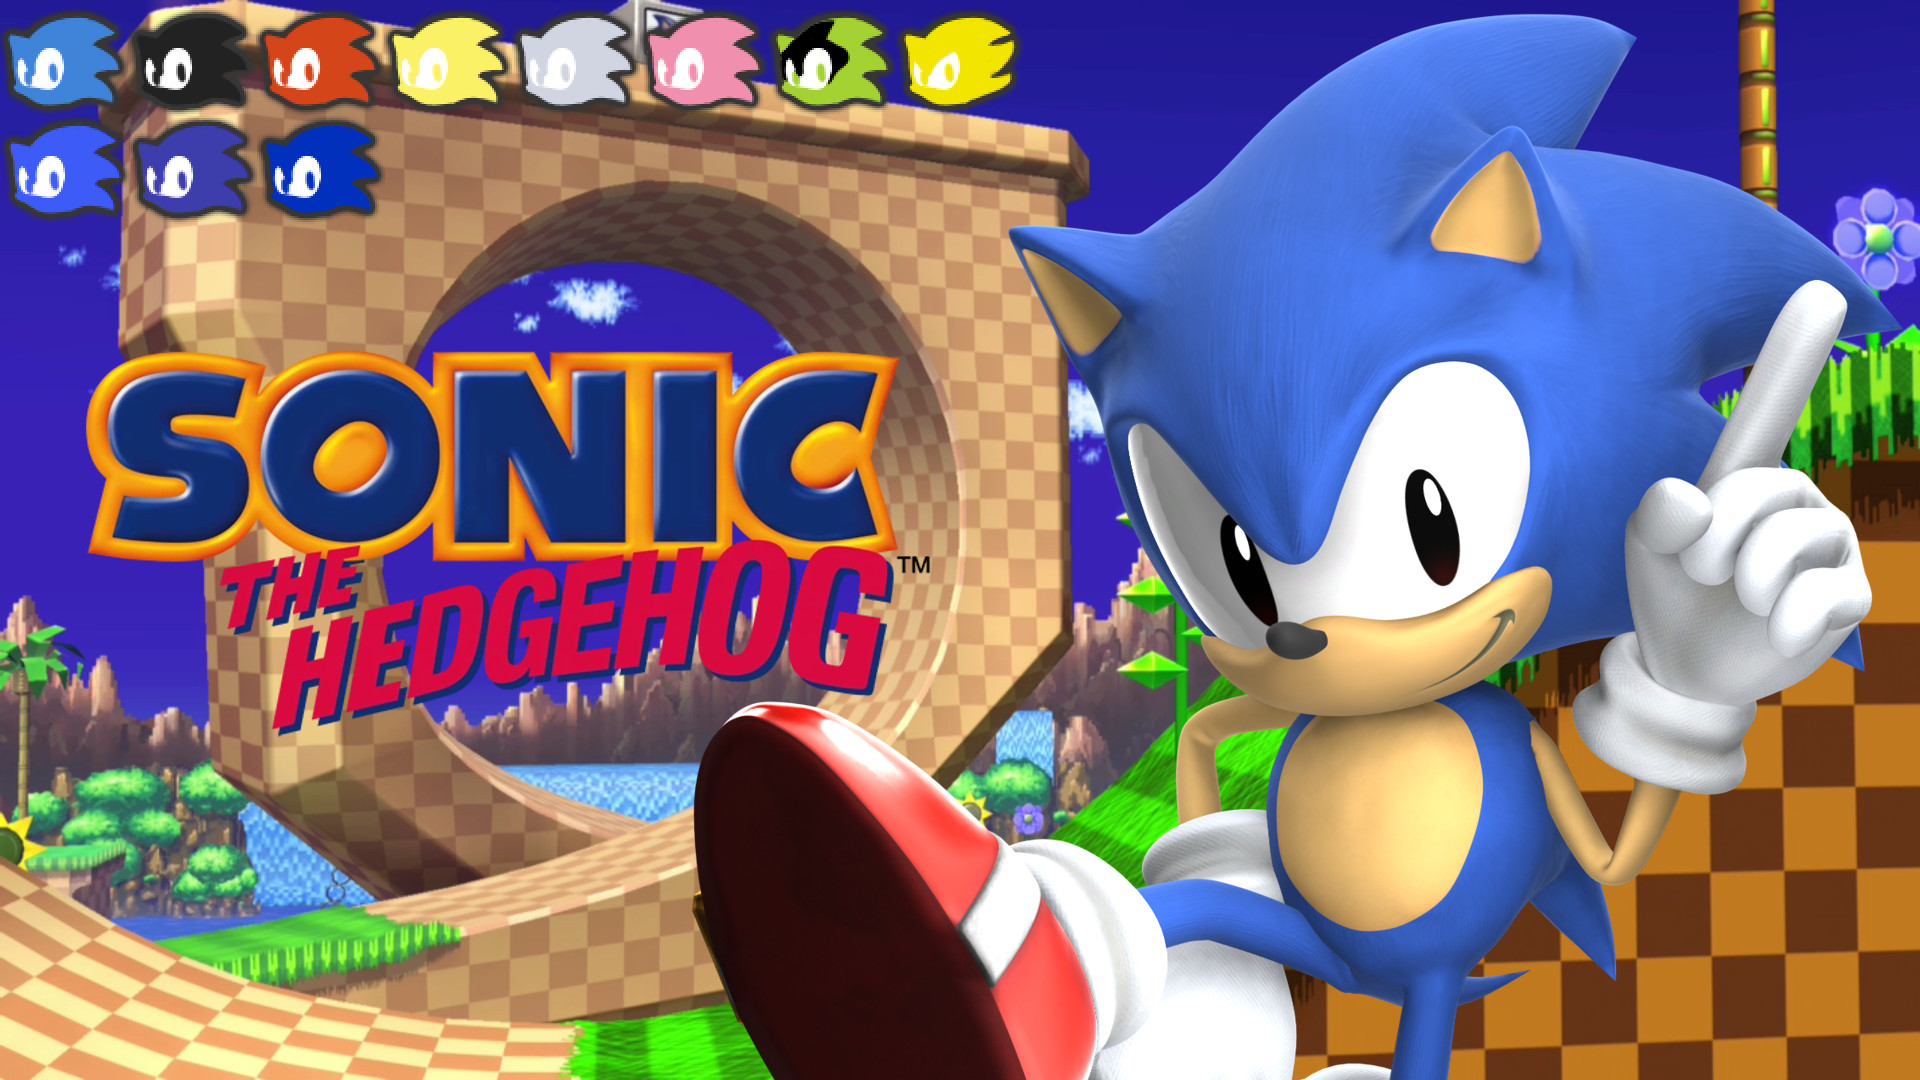 Sonic The Hedgehog | Penry Creative